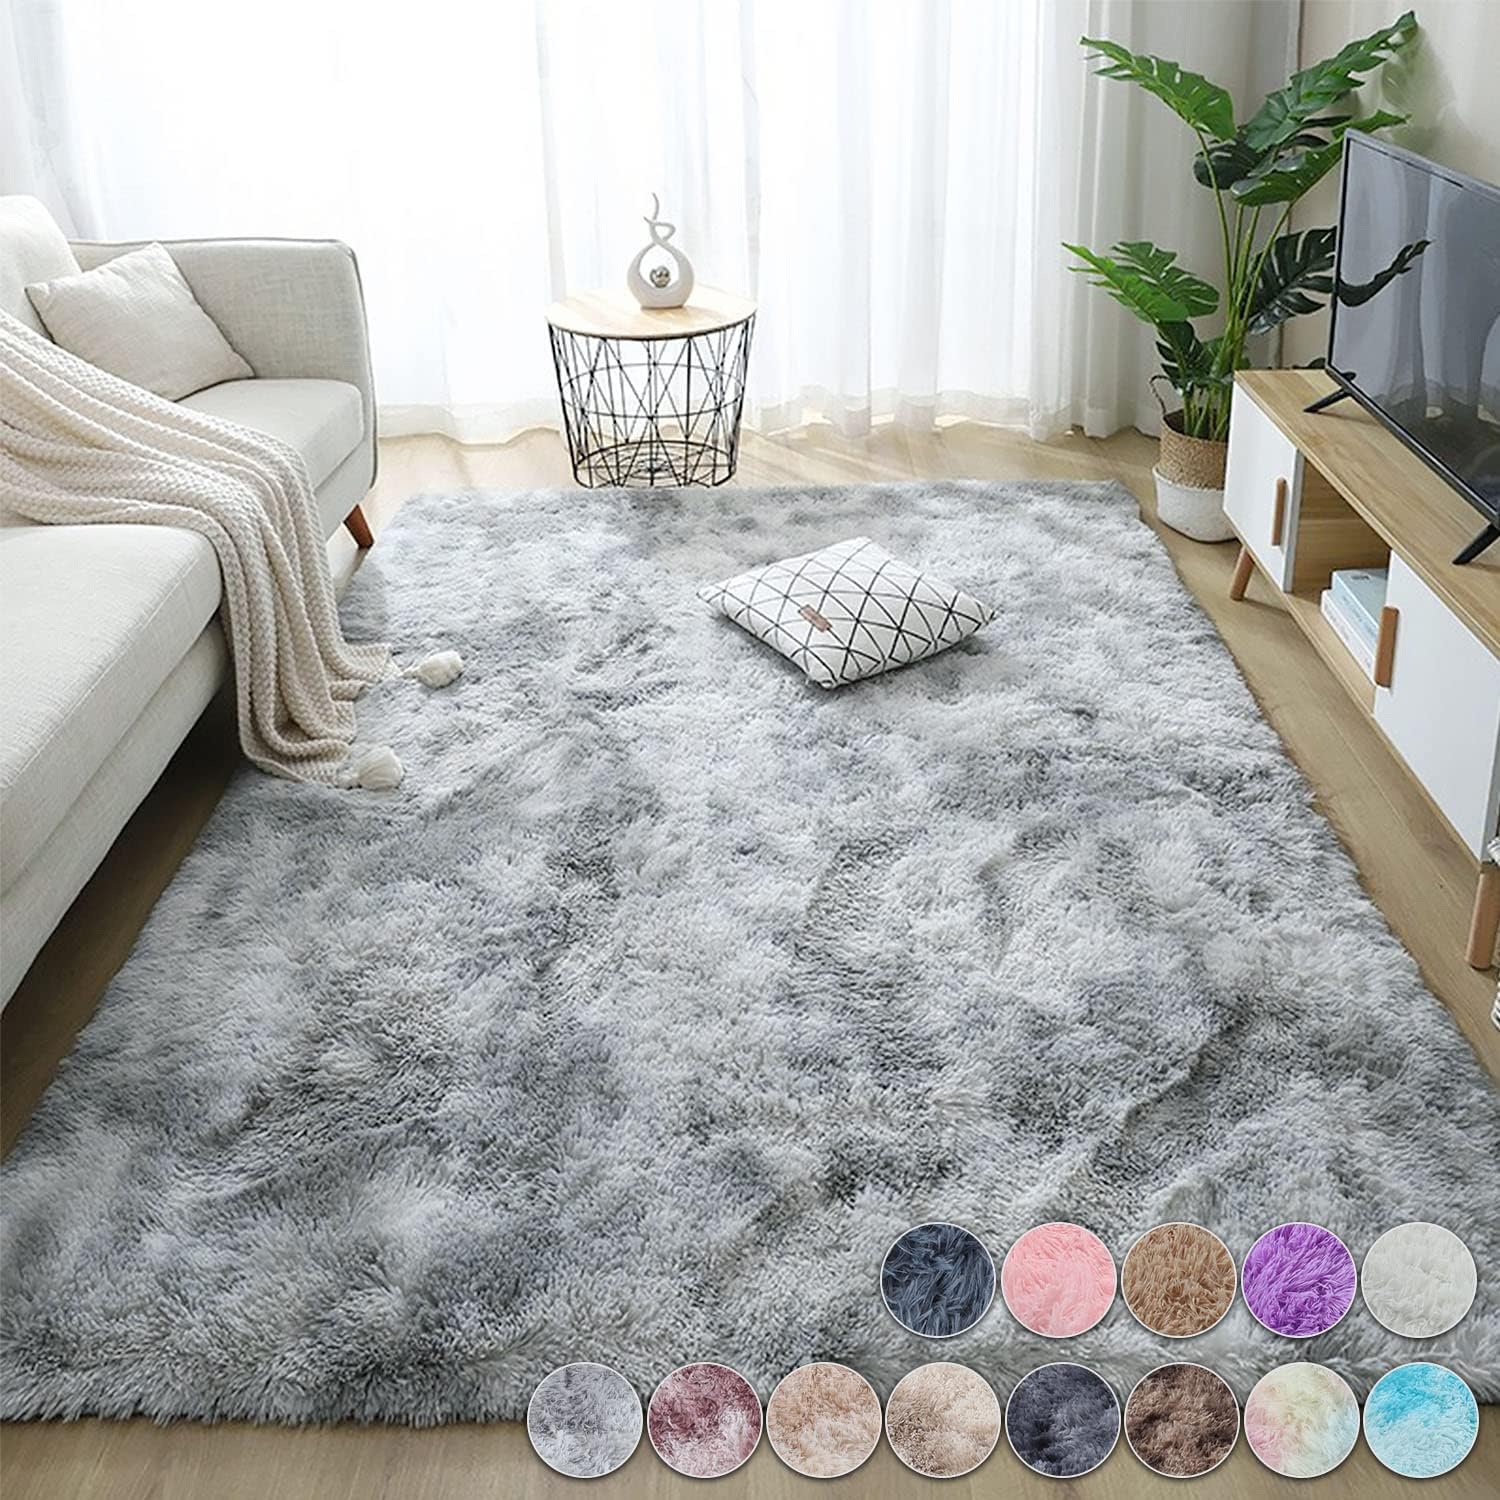 Fluffy Area Rug, 3x5,Soft Fuzzy Shaggy Carpet for Girls Bedroom, Kids/ Living Room with Non-Slip Bottom,Light Grey